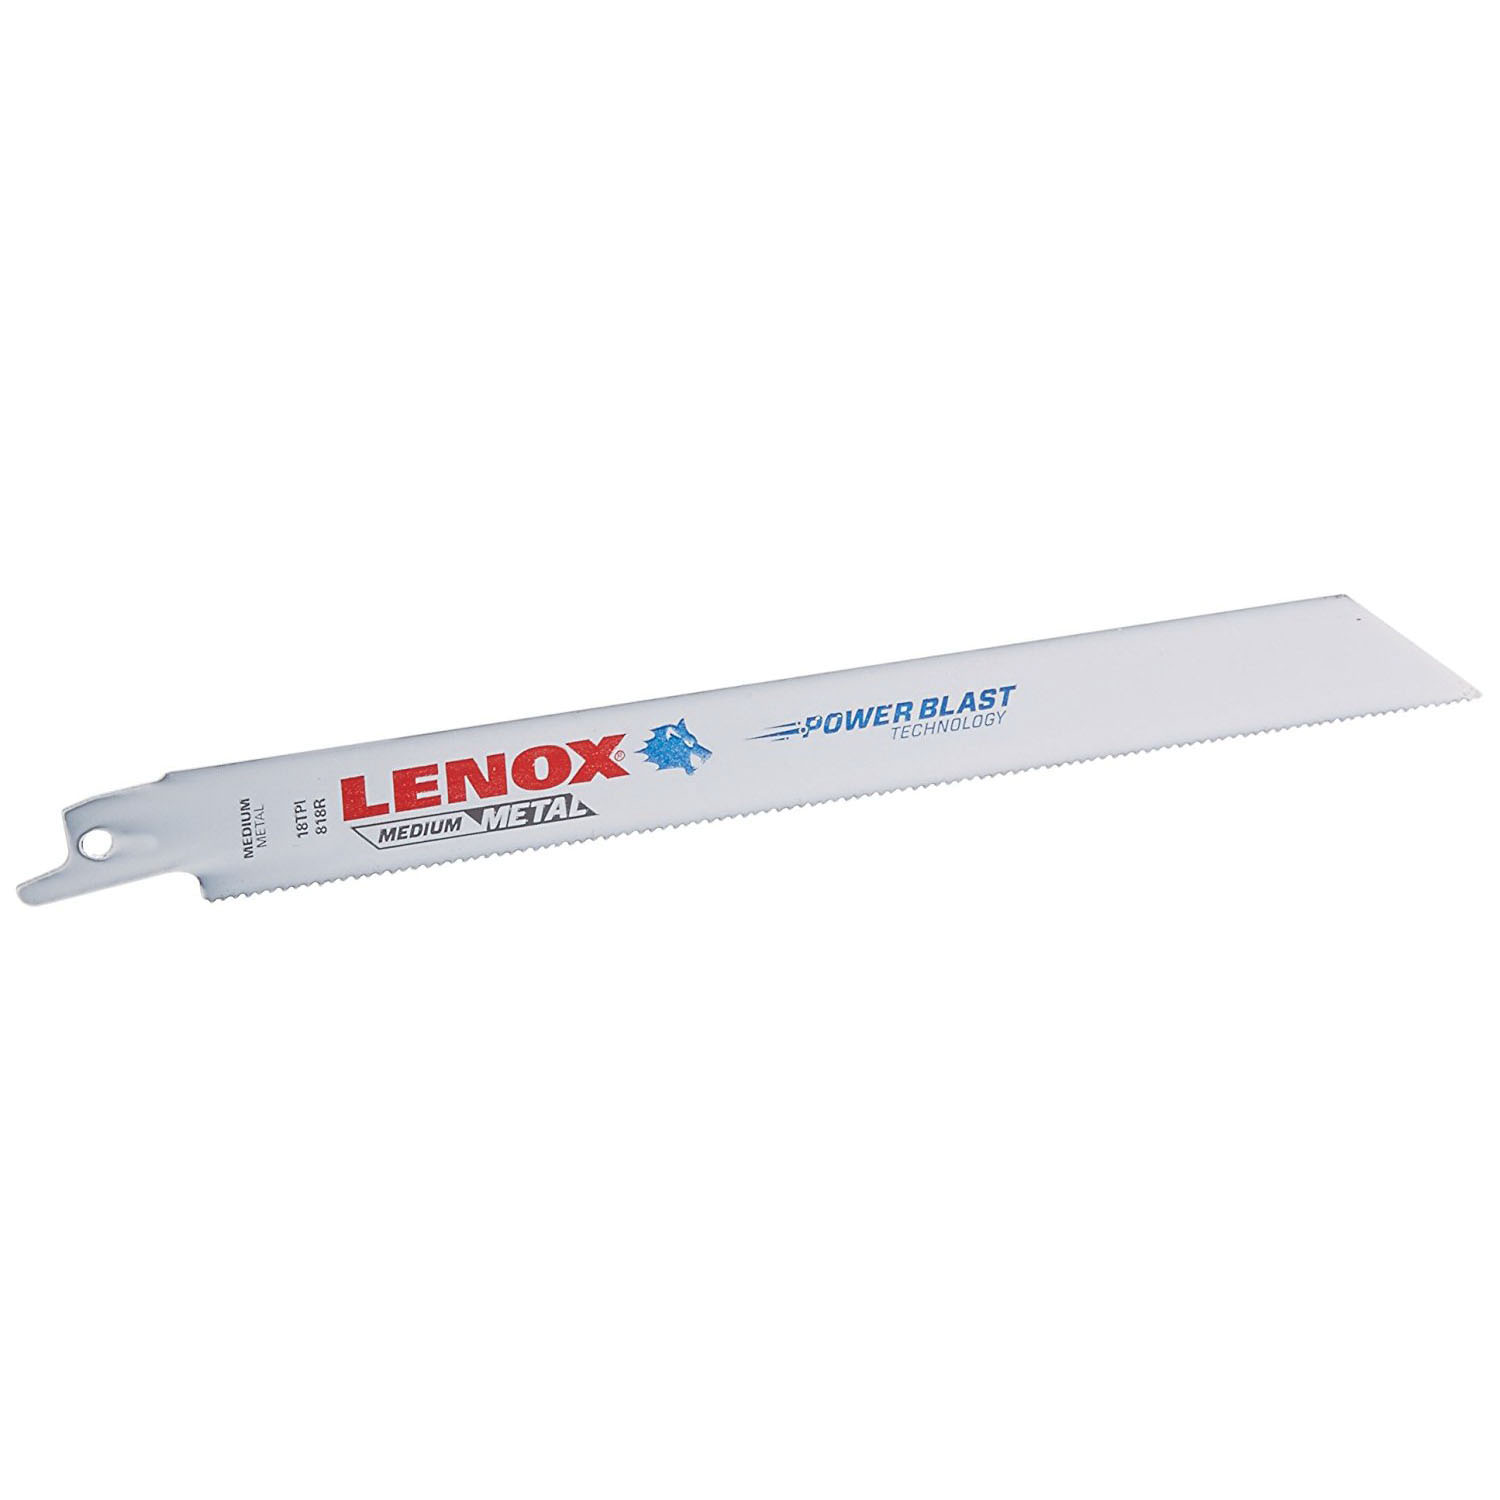 LENOX® Tuff Tooth 20578818R Reciprocating Saw Blade, 8 in L, 3/4 in W, 18 TPI, Bi-Metal Blade